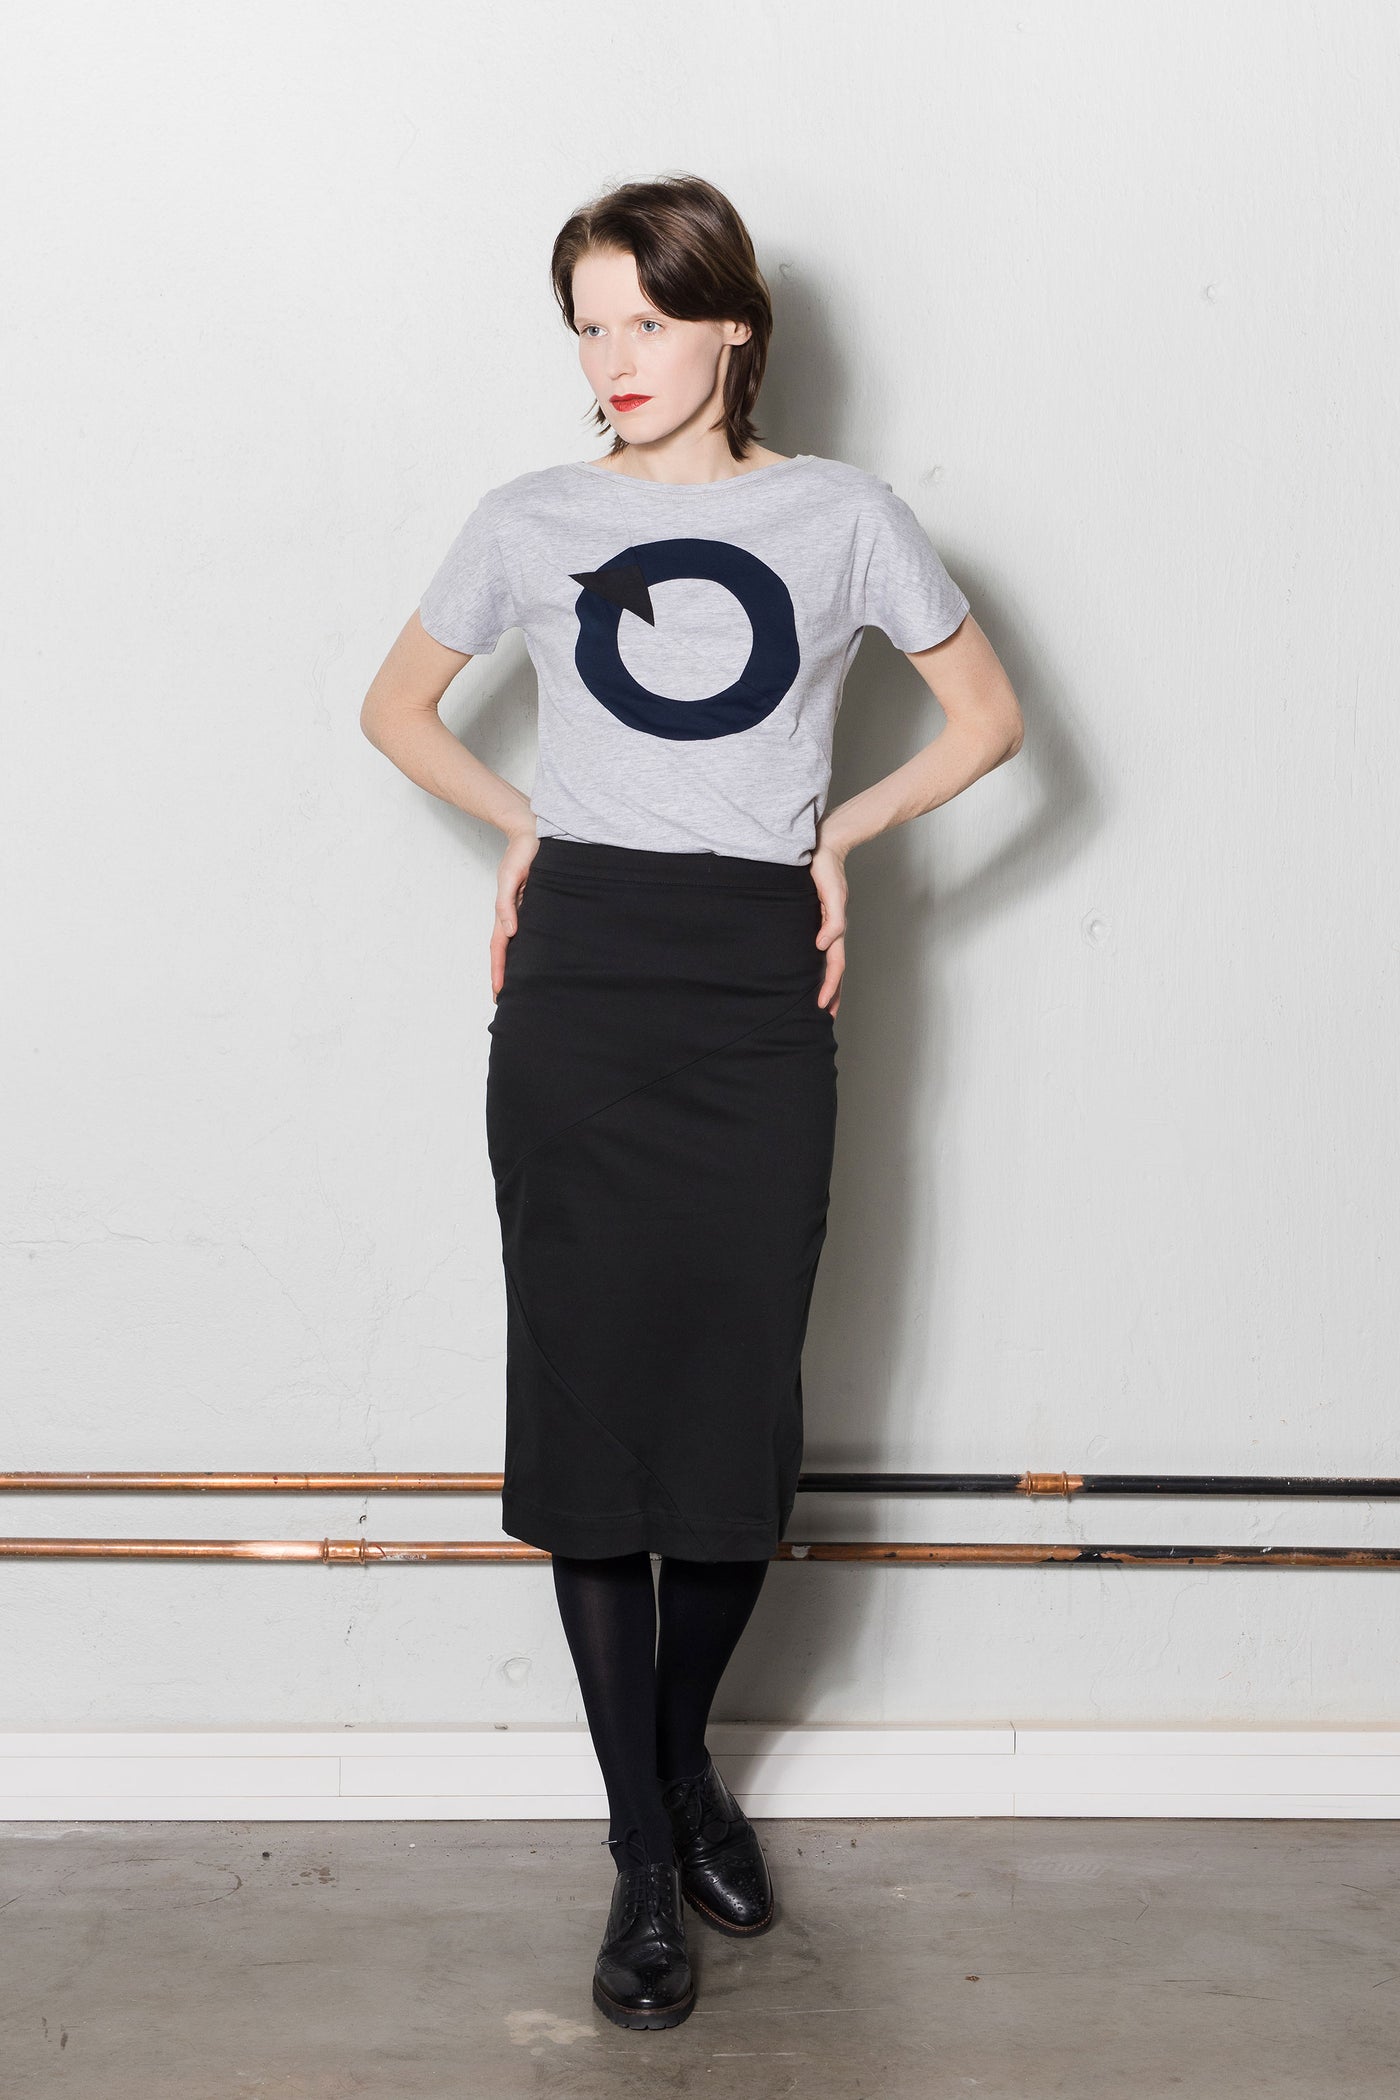 Up-shirt for women, circle motif | Light grey, black - Reet Aus